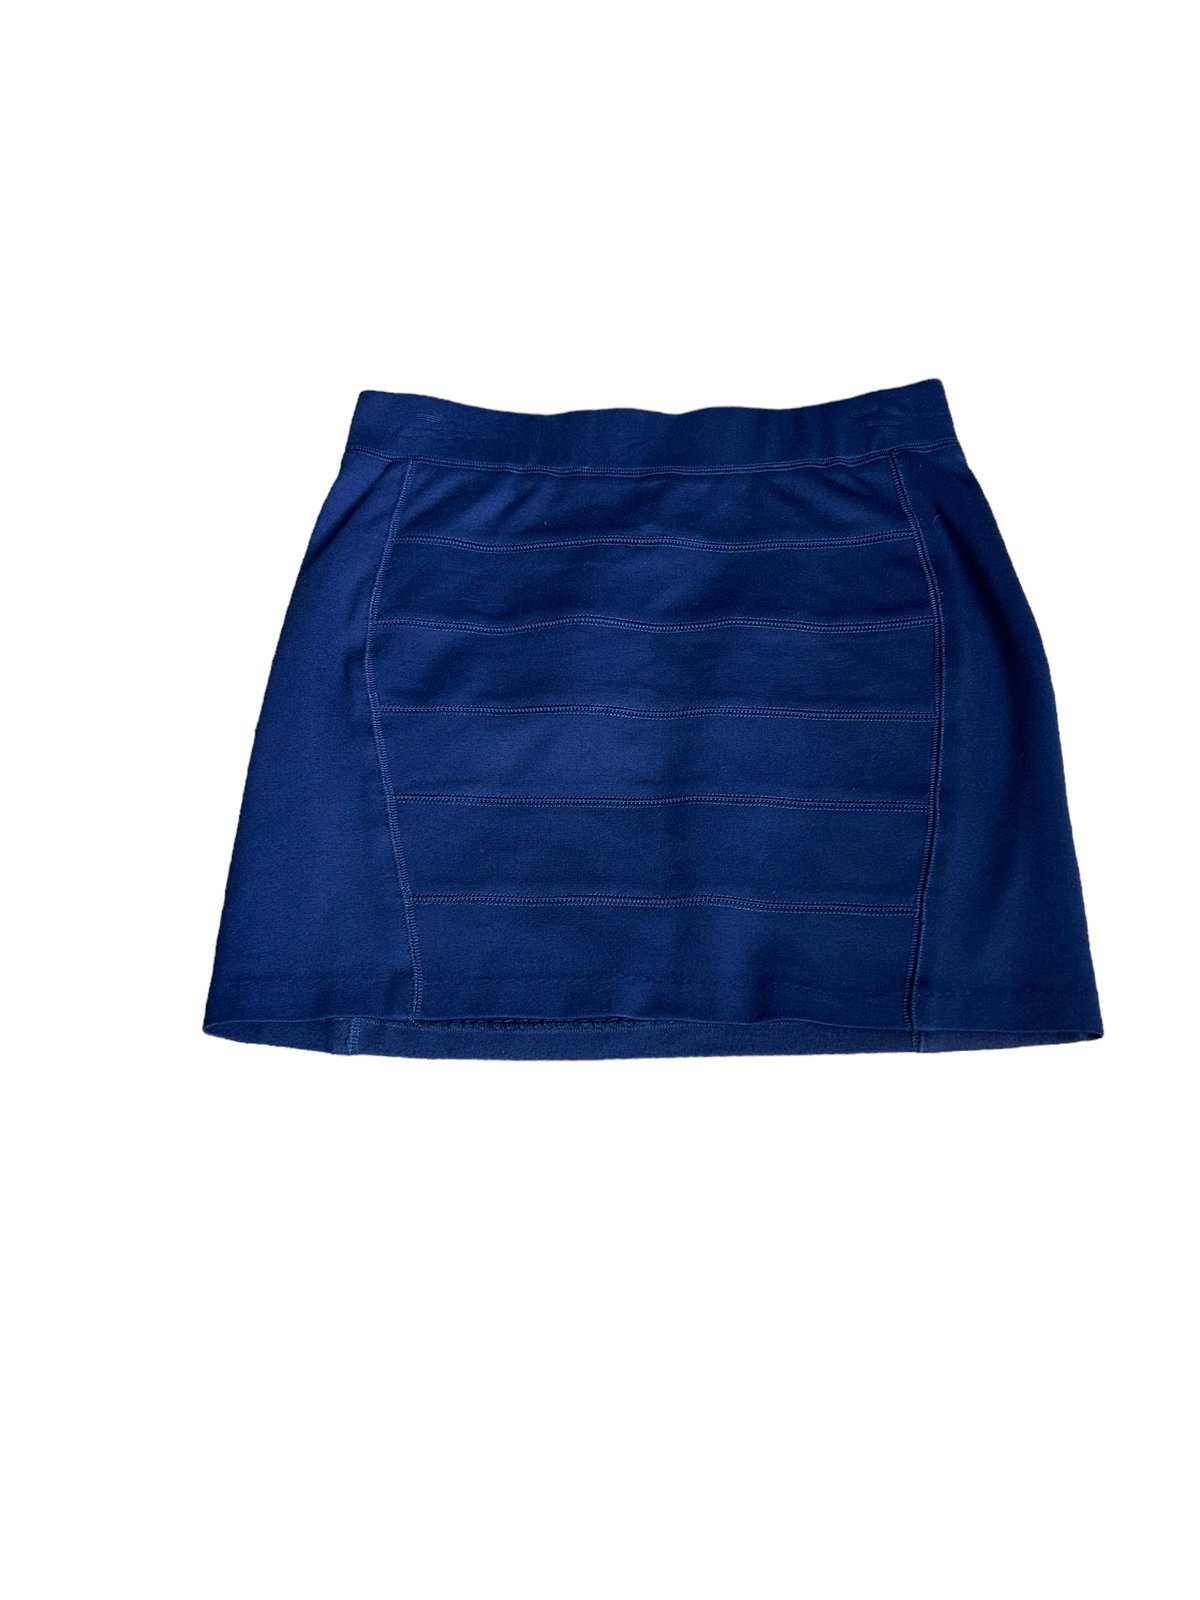 Comfortable Trina Turk tracy mini skirt hIHDA5x5u Hot Sale